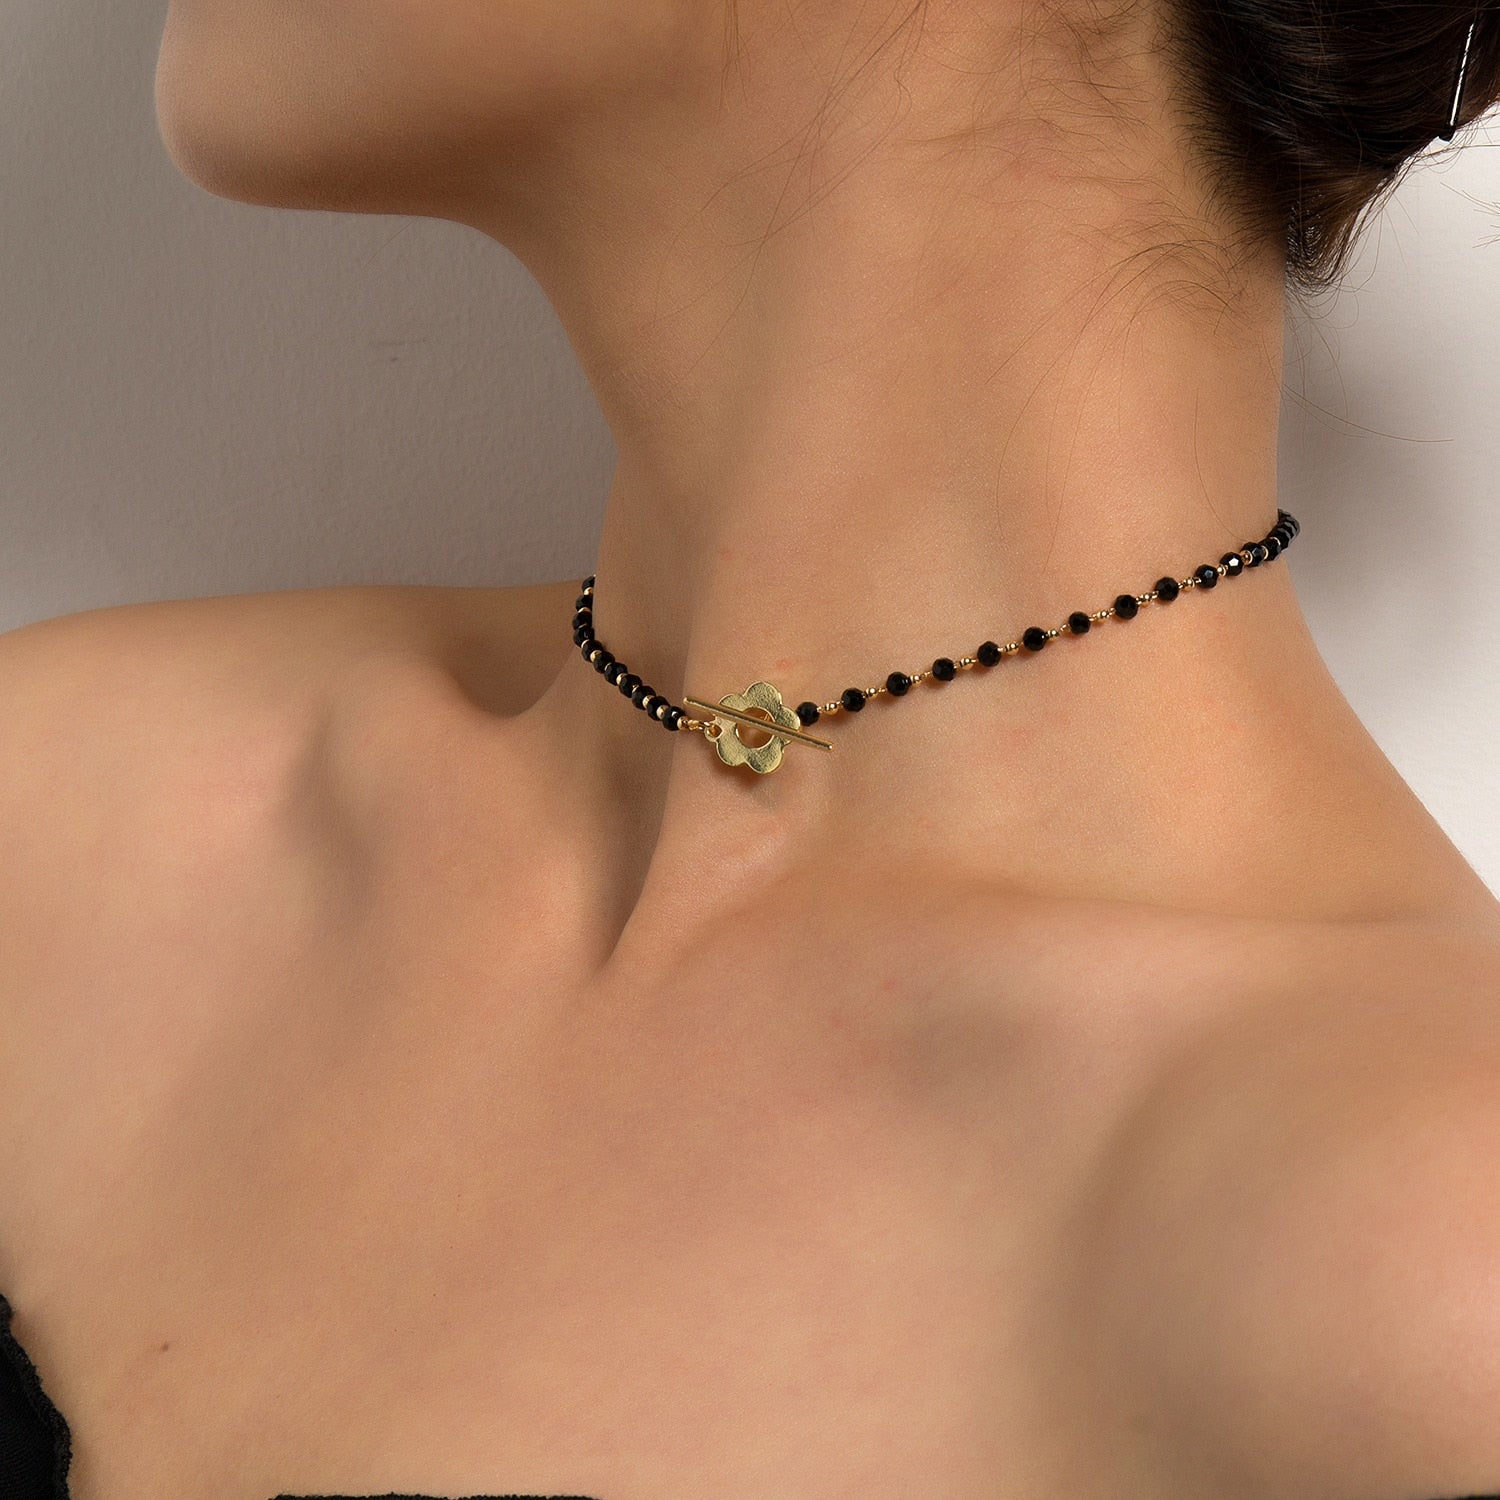 Fashion Luxury Black Crystal Glass Bead Chain Choker Necklace